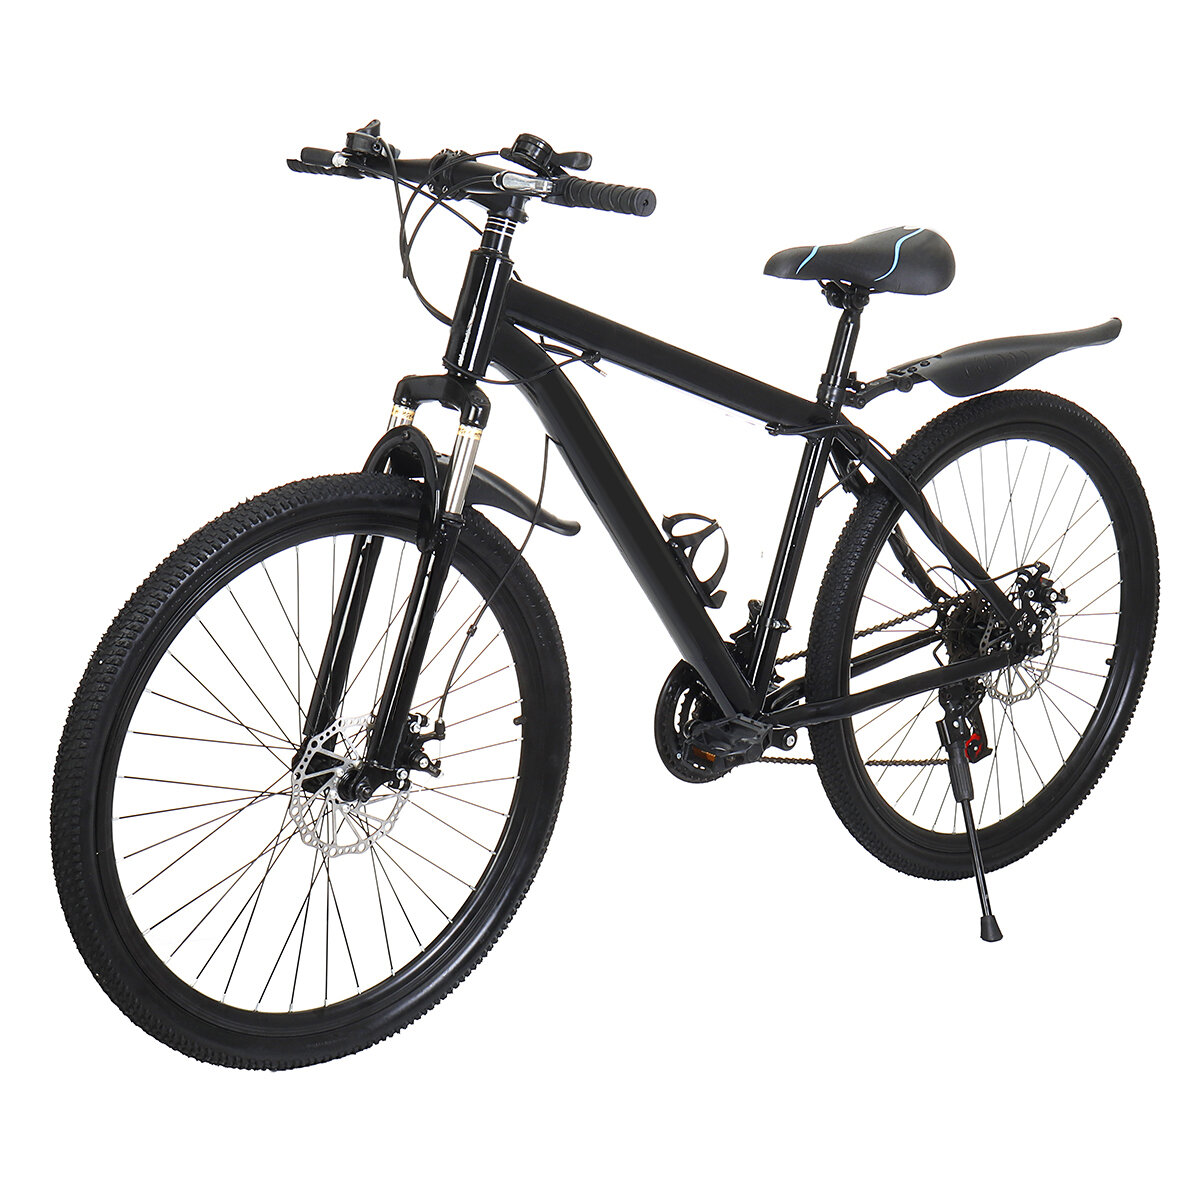 BIKIGHT 26 Inch Bicicleta de montaña de 21 velocidades Freno de disco doble delantero y trasero MTB al aire libre Bicicl